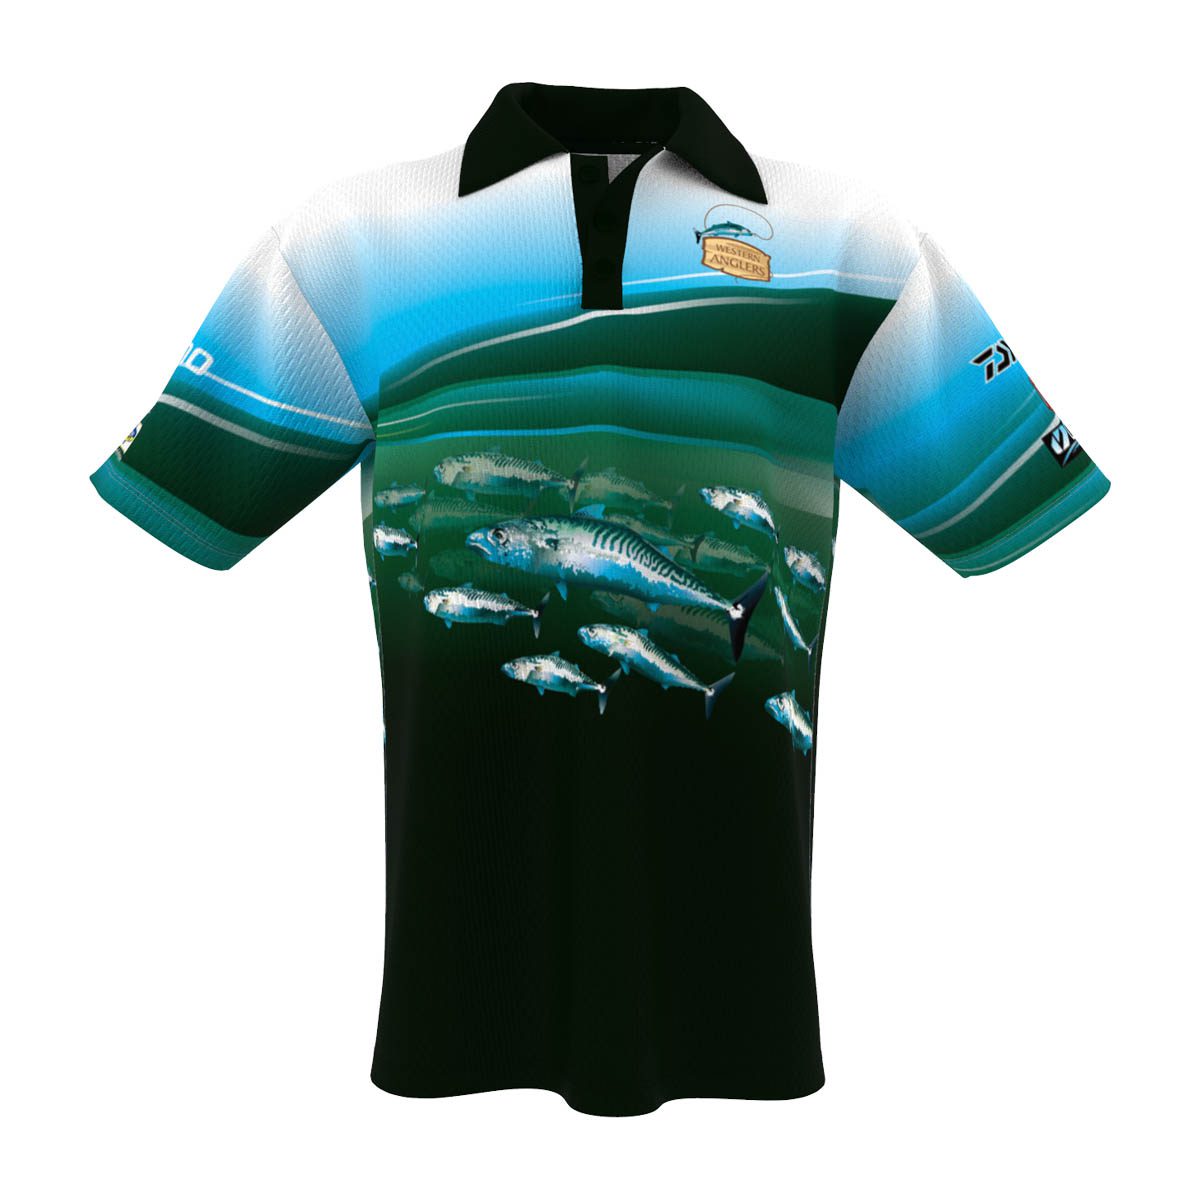 Custom Fishing Jersey & Uniform, Design Your Own